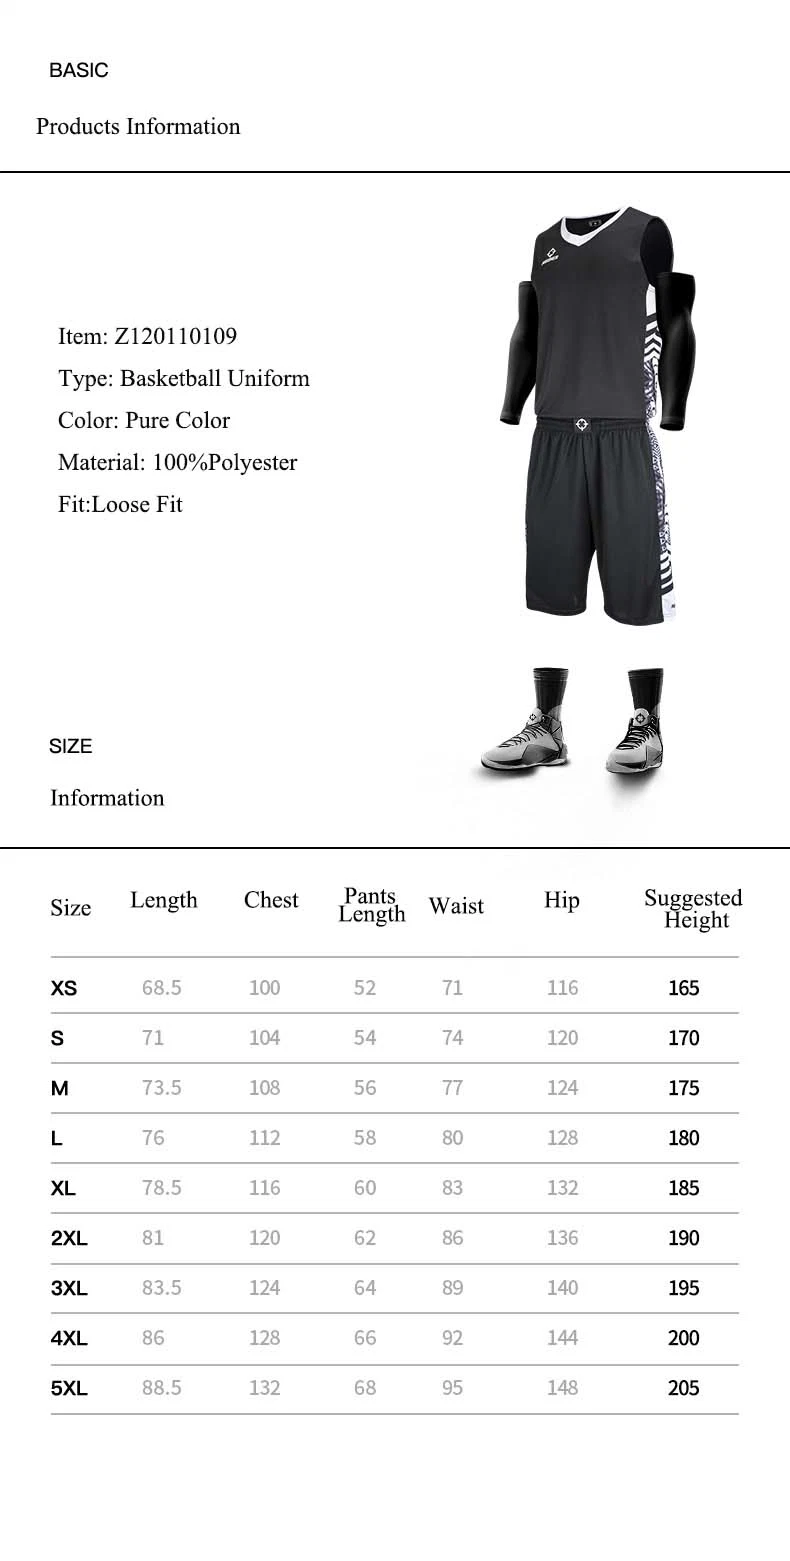 Riogrer Sublimation Basketball Jersey Sports Wear Custom Design for Men Shorts Mesh Polyester